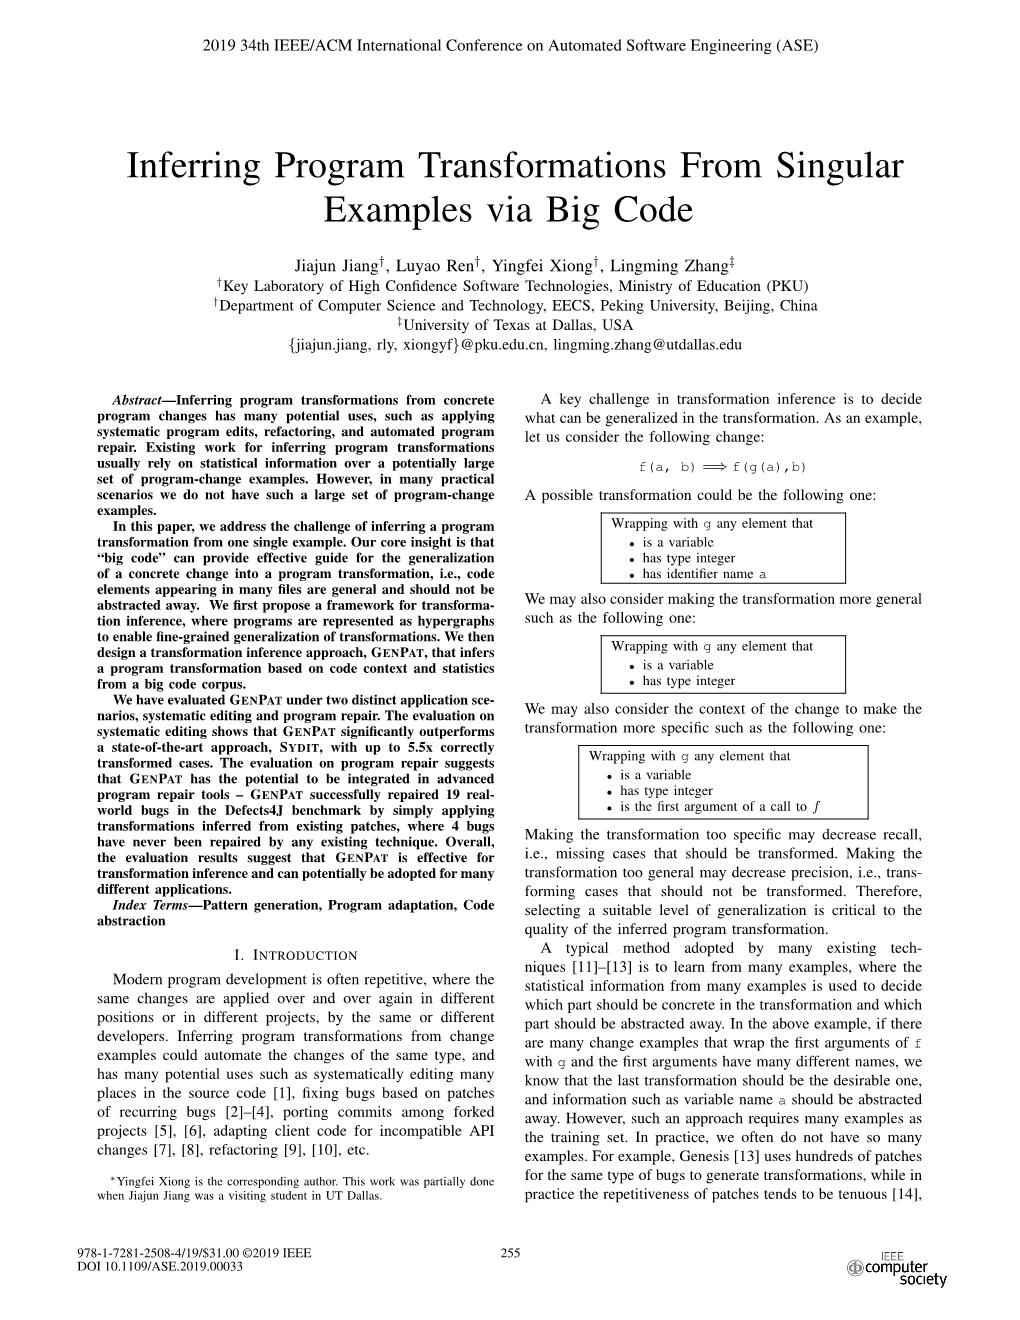 Inferring Program Transformations from Singular Examples Via Big Code